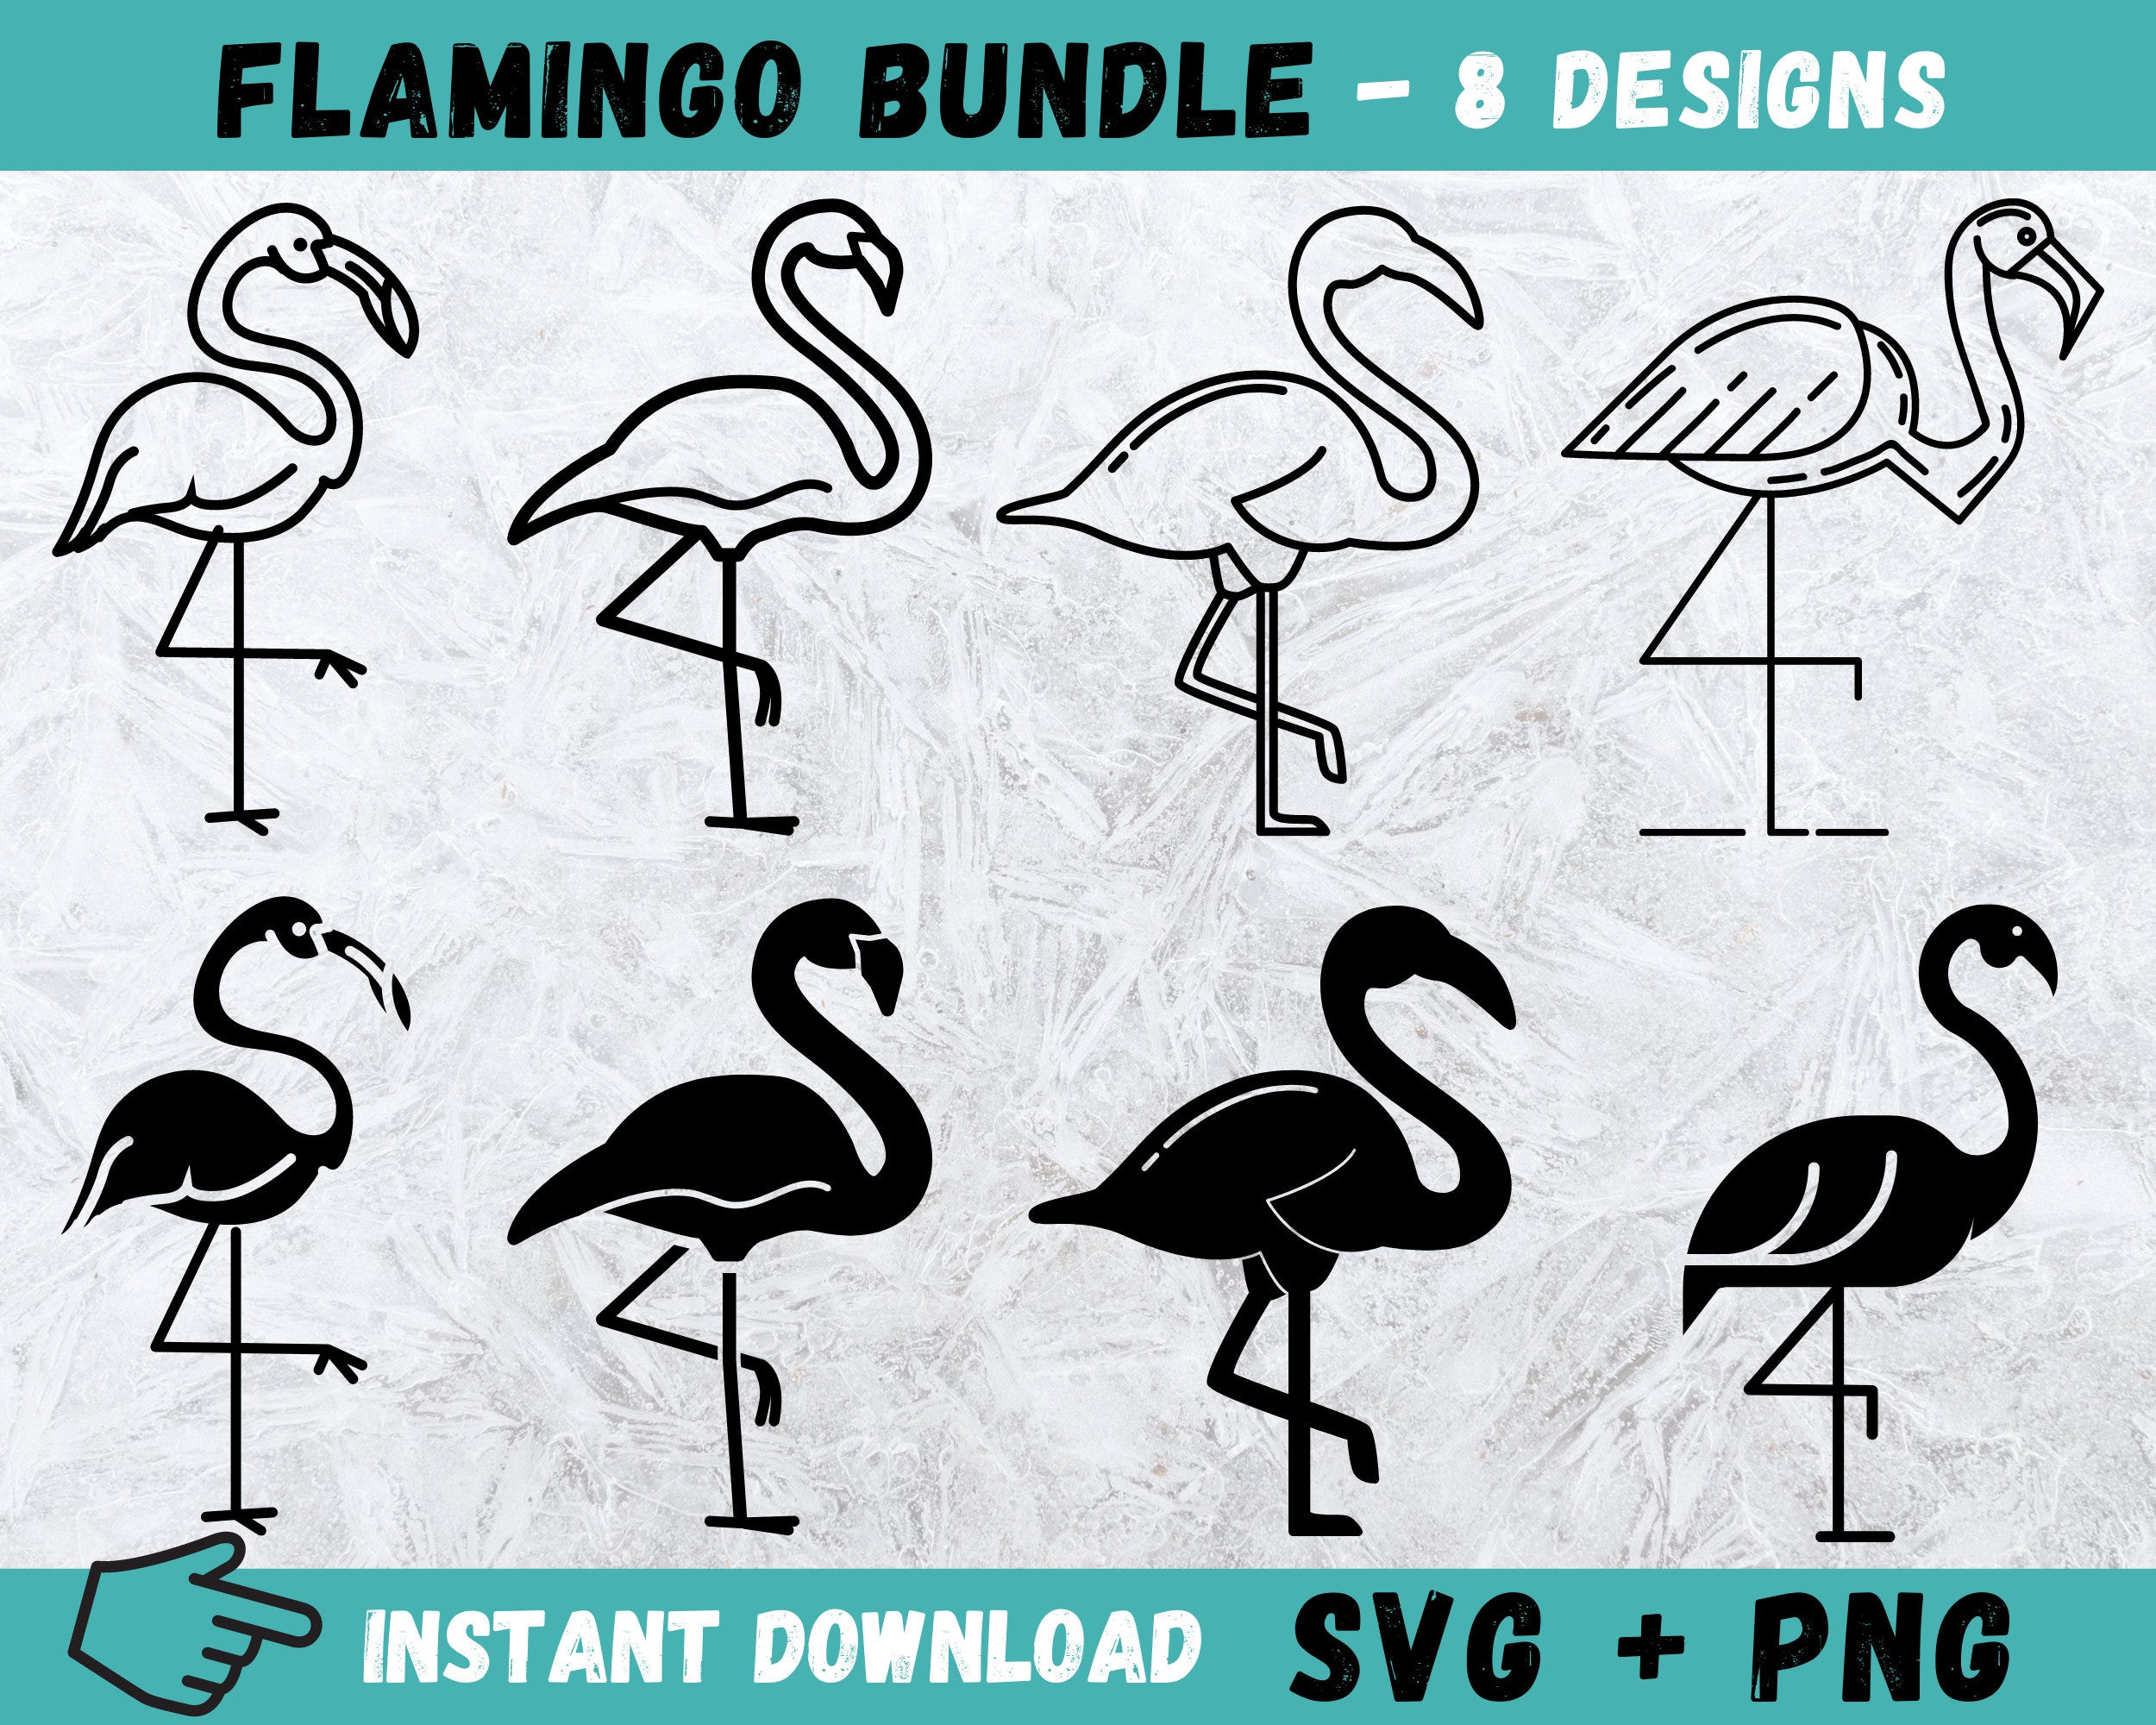 Flamingo SVG, Flamingo Cut File, Flamingo Cricut, Flamingo SVG Bundle, Flamingo Silhouette, Flamingo PNG, Commercial Use, Instant Download